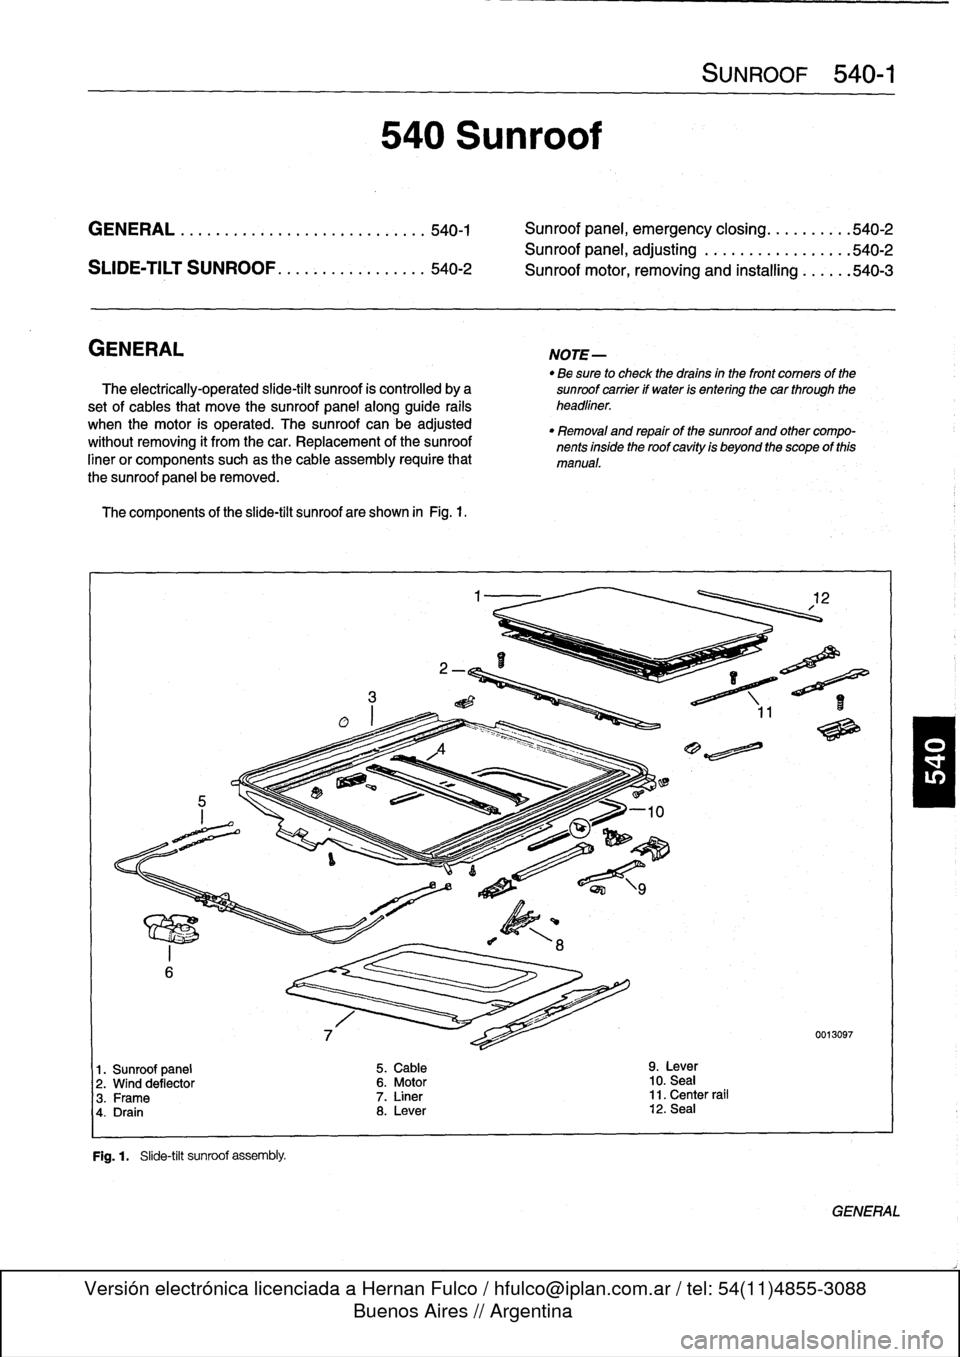 BMW 318i 1995 E36 Workshop Manual 
GENERAL
...
.
.
.
.
.
................
.
.
.
.
540-1

	

Sunroof
panel,
emergency
closing
.......
.
.
.540-2

Sunroof
panel,
adjusting
..
.
...........
.
.
.540-2

SUDE-TILT
SUNROOF
.
.
.
.
.
.
.
.
.